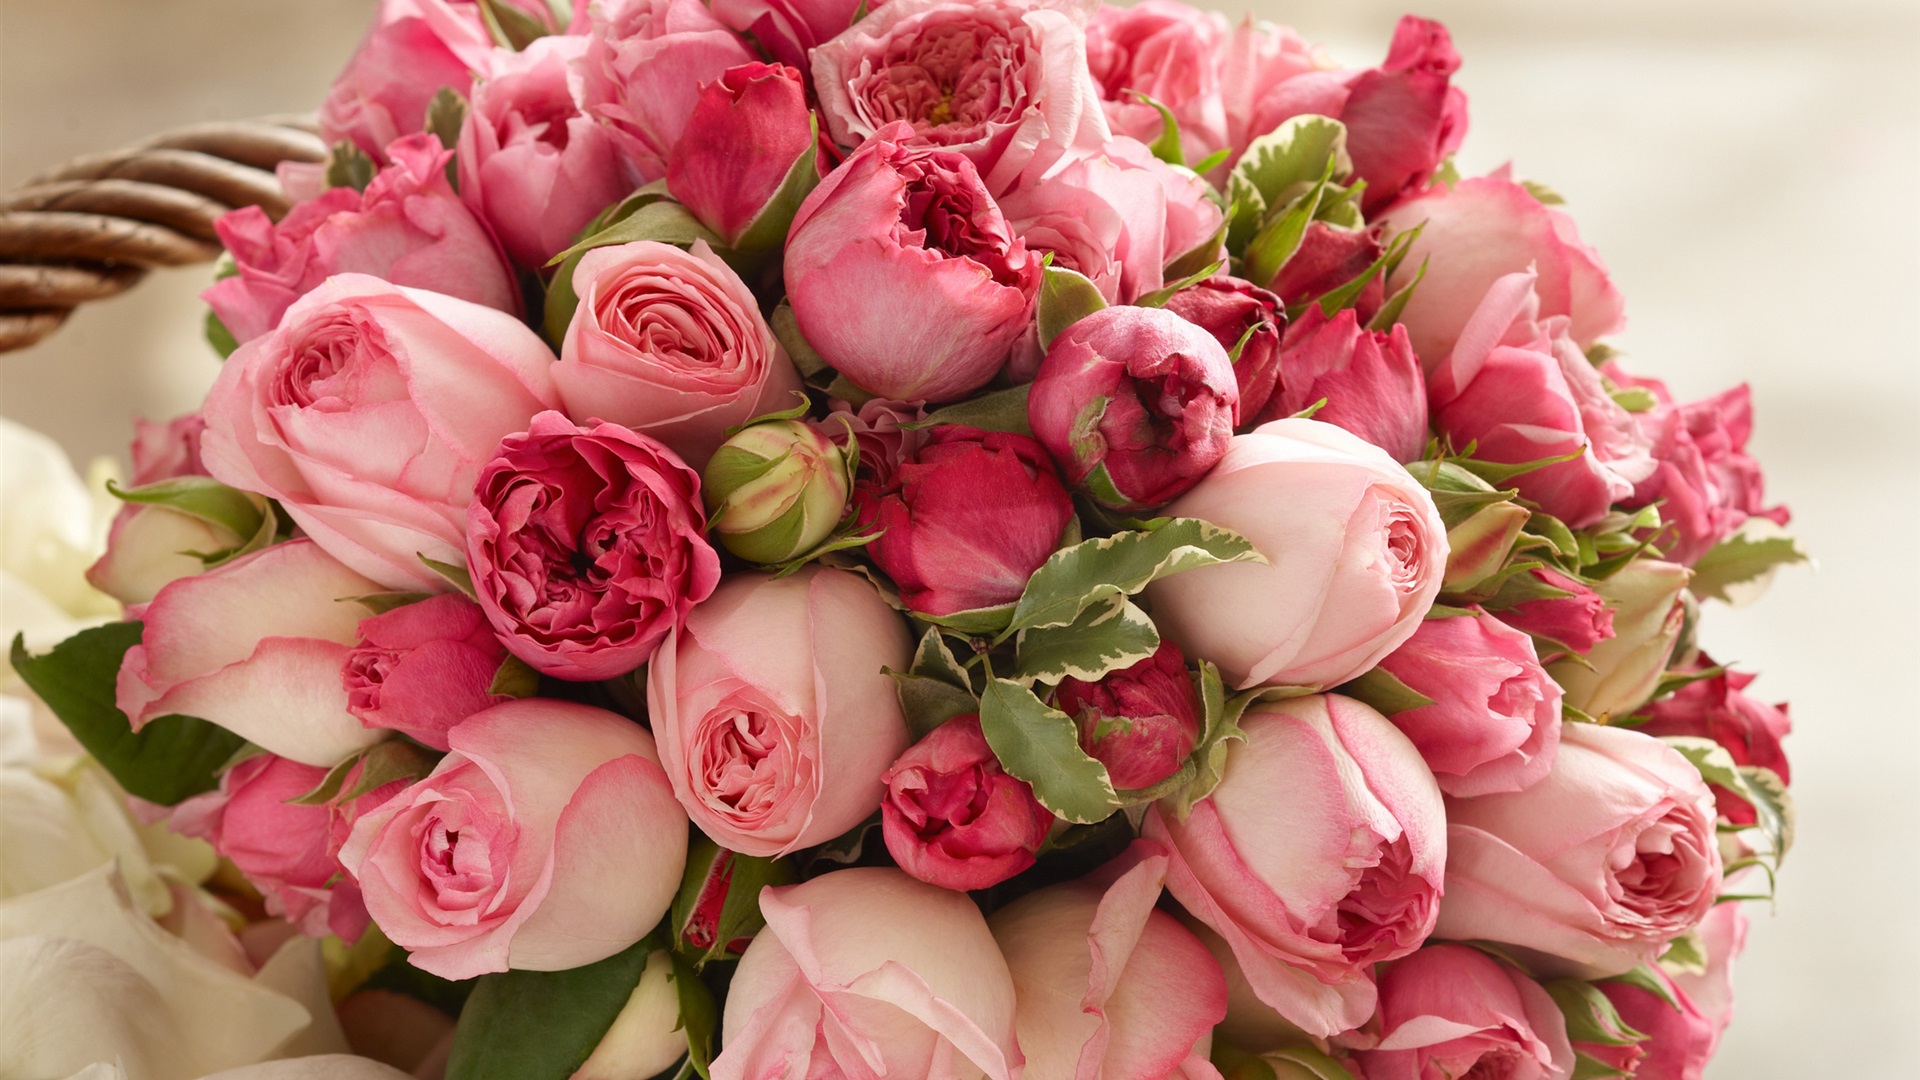 Pink-rose-flowers-beautiful-bouquet_1920x1080.jpg